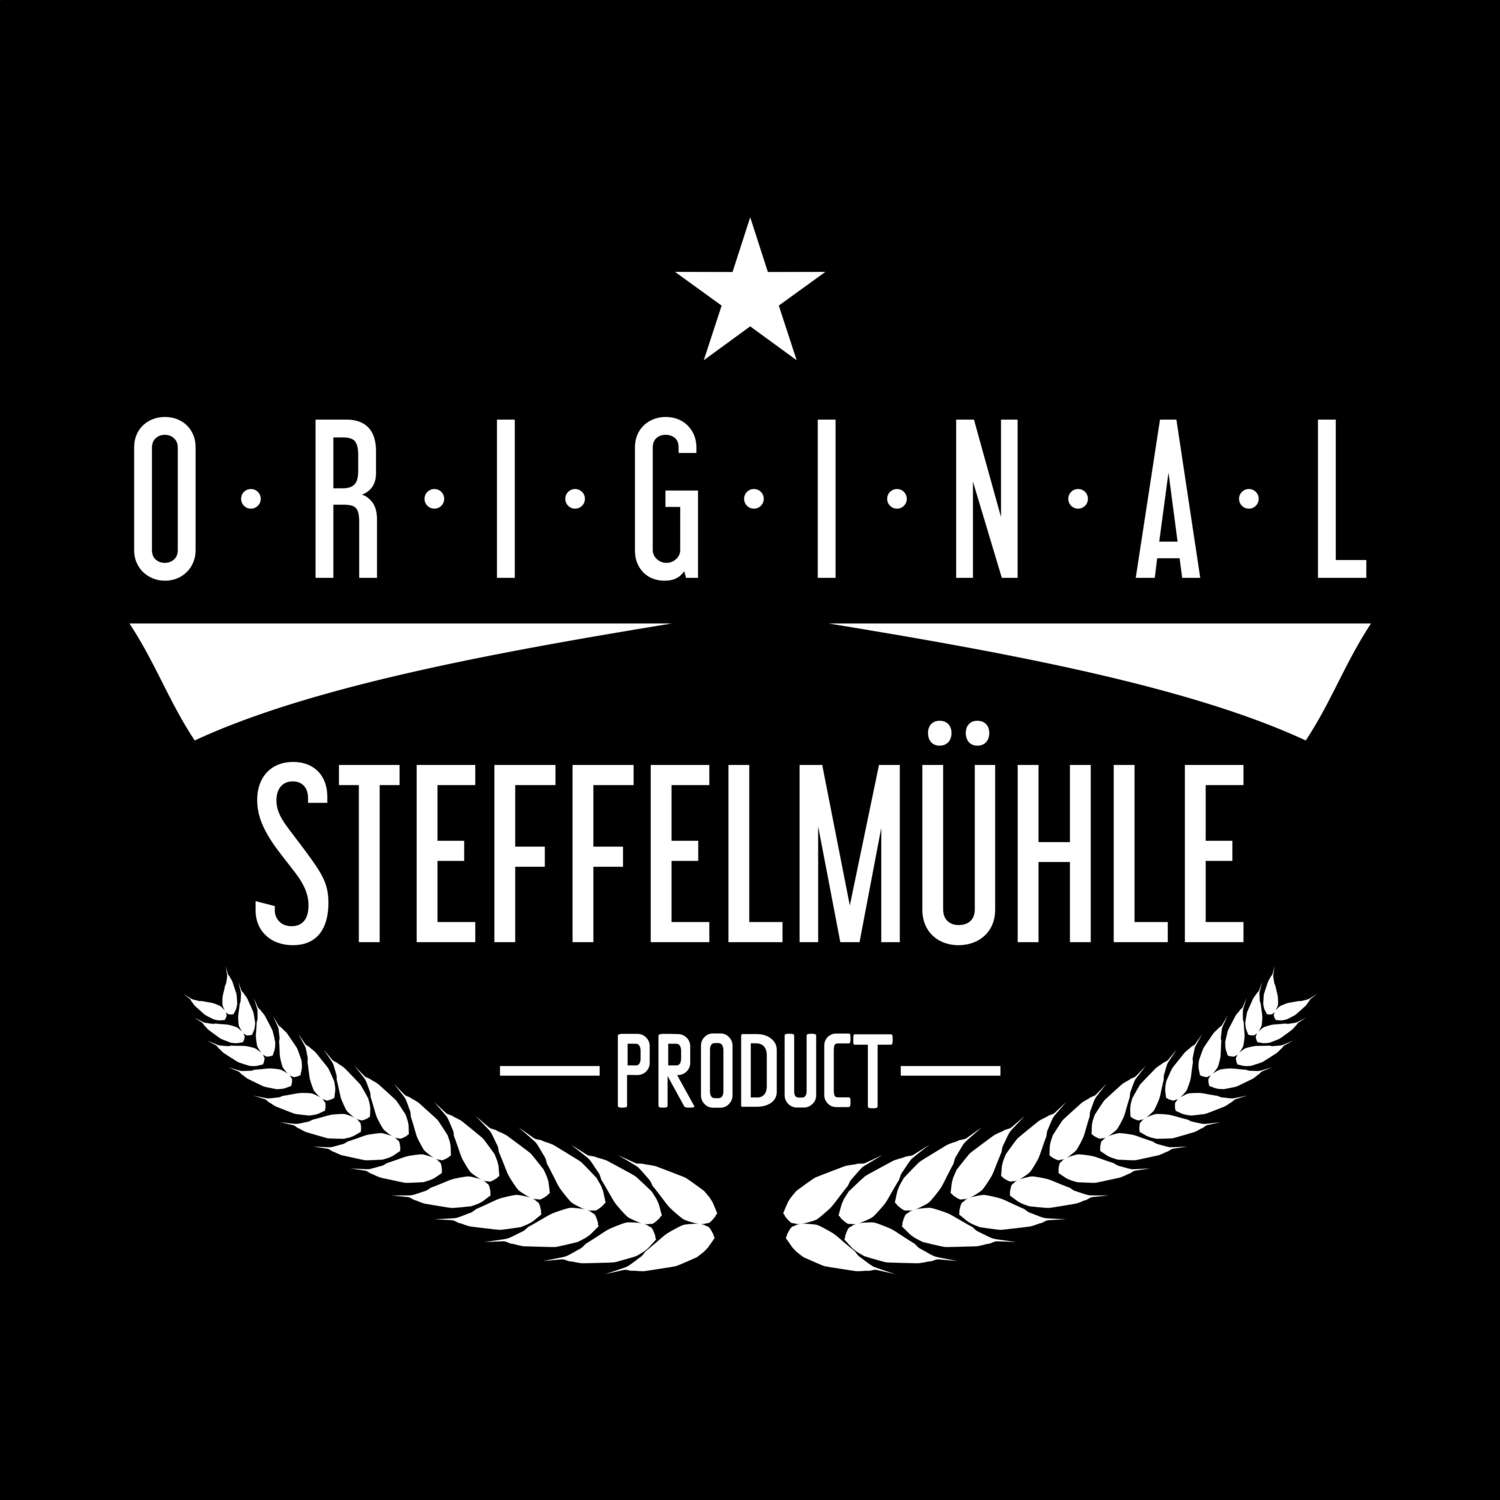 Steffelmühle T-Shirt »Original Product«